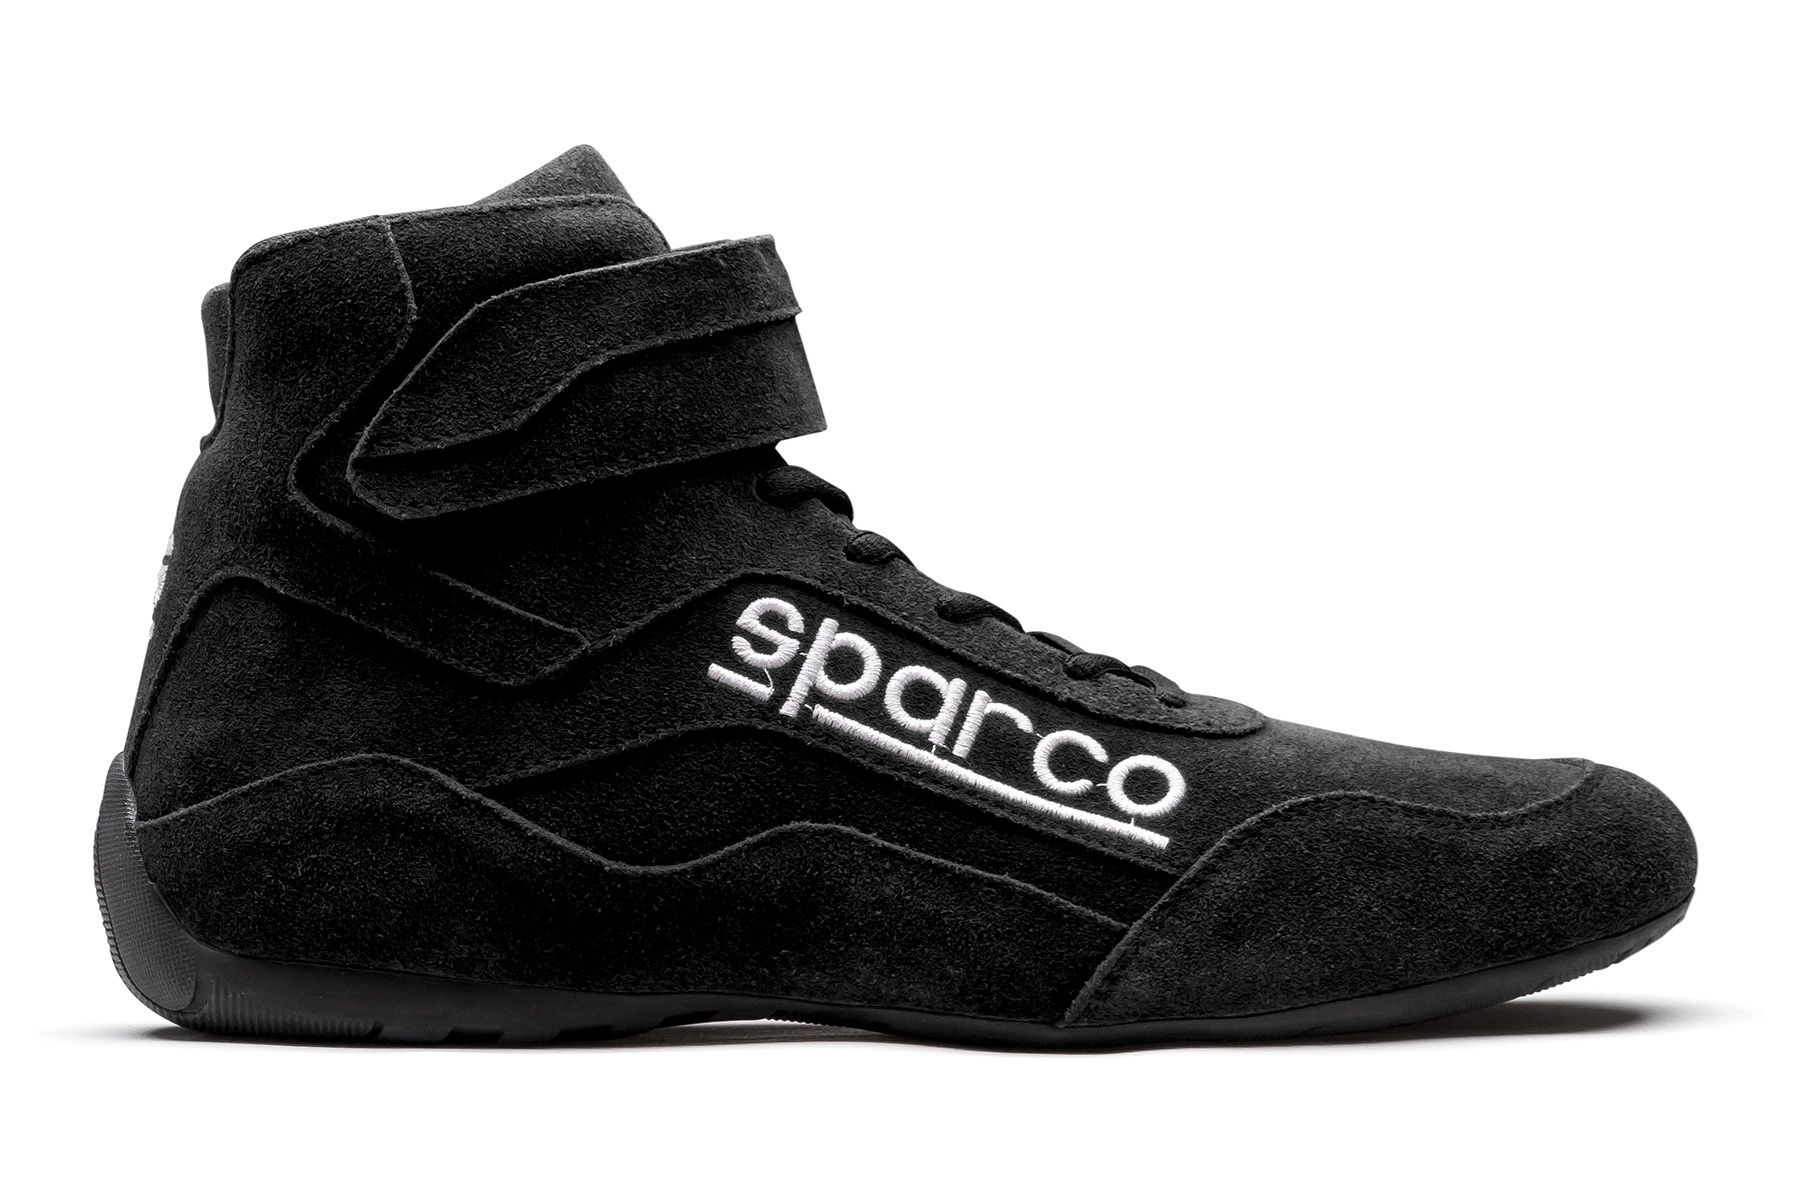 sparco race v2 racing shoe black